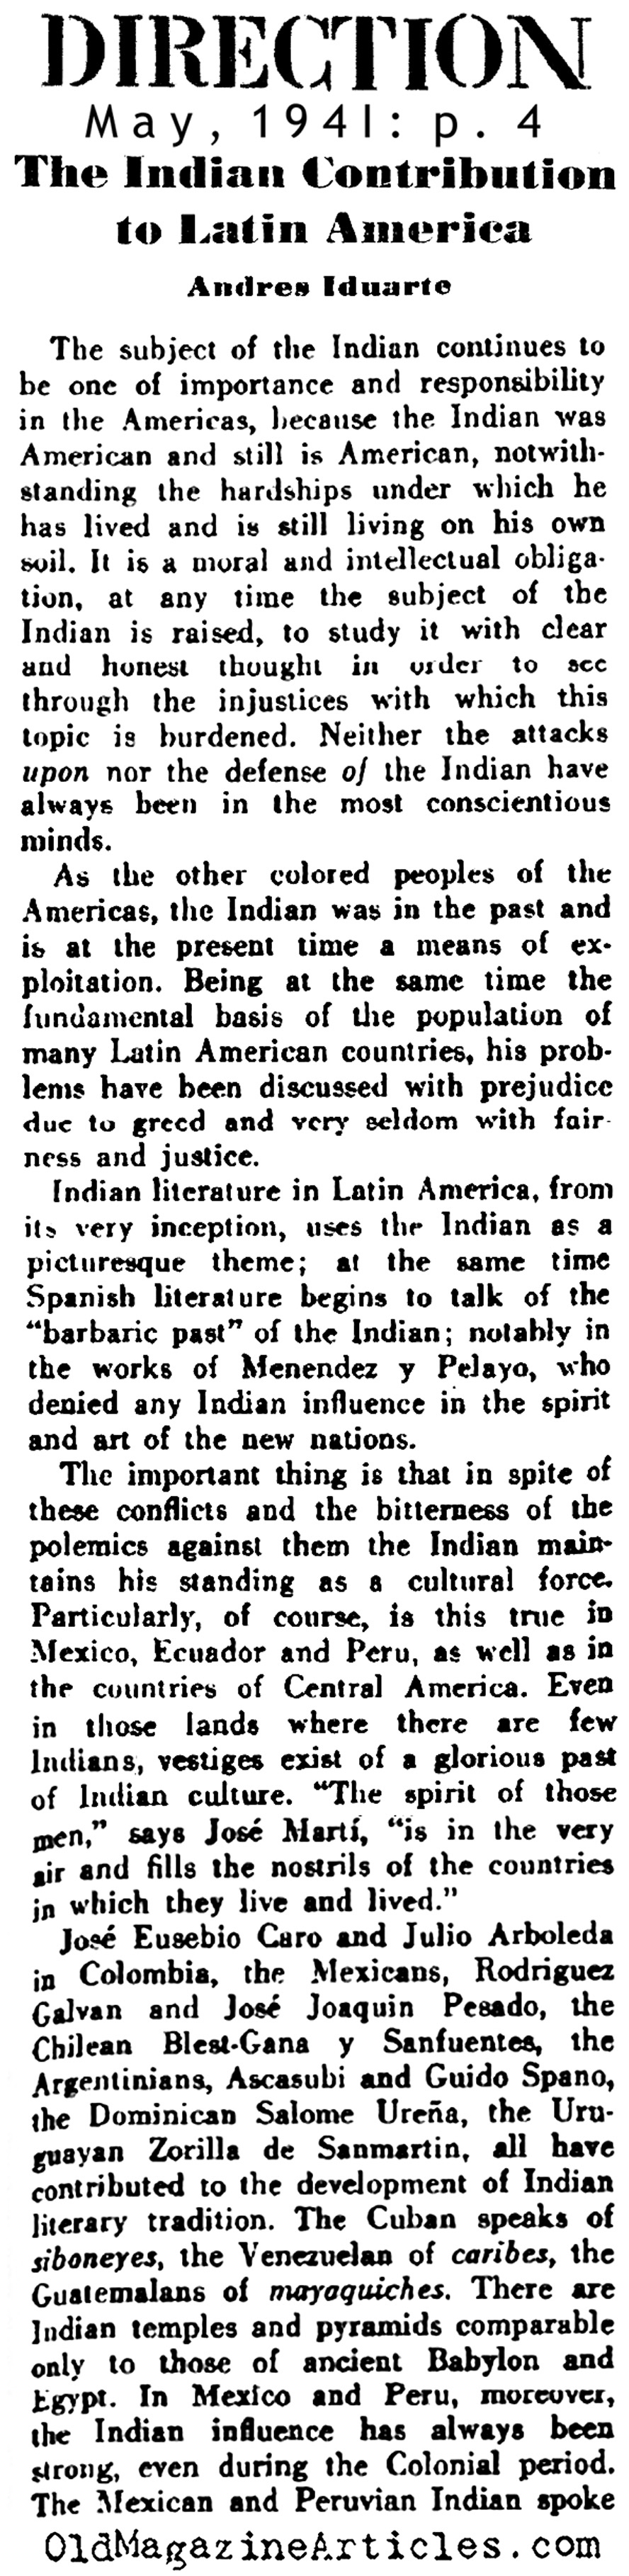 Native Contributions to Latin American Arts  (Direction Magazine, 1941)